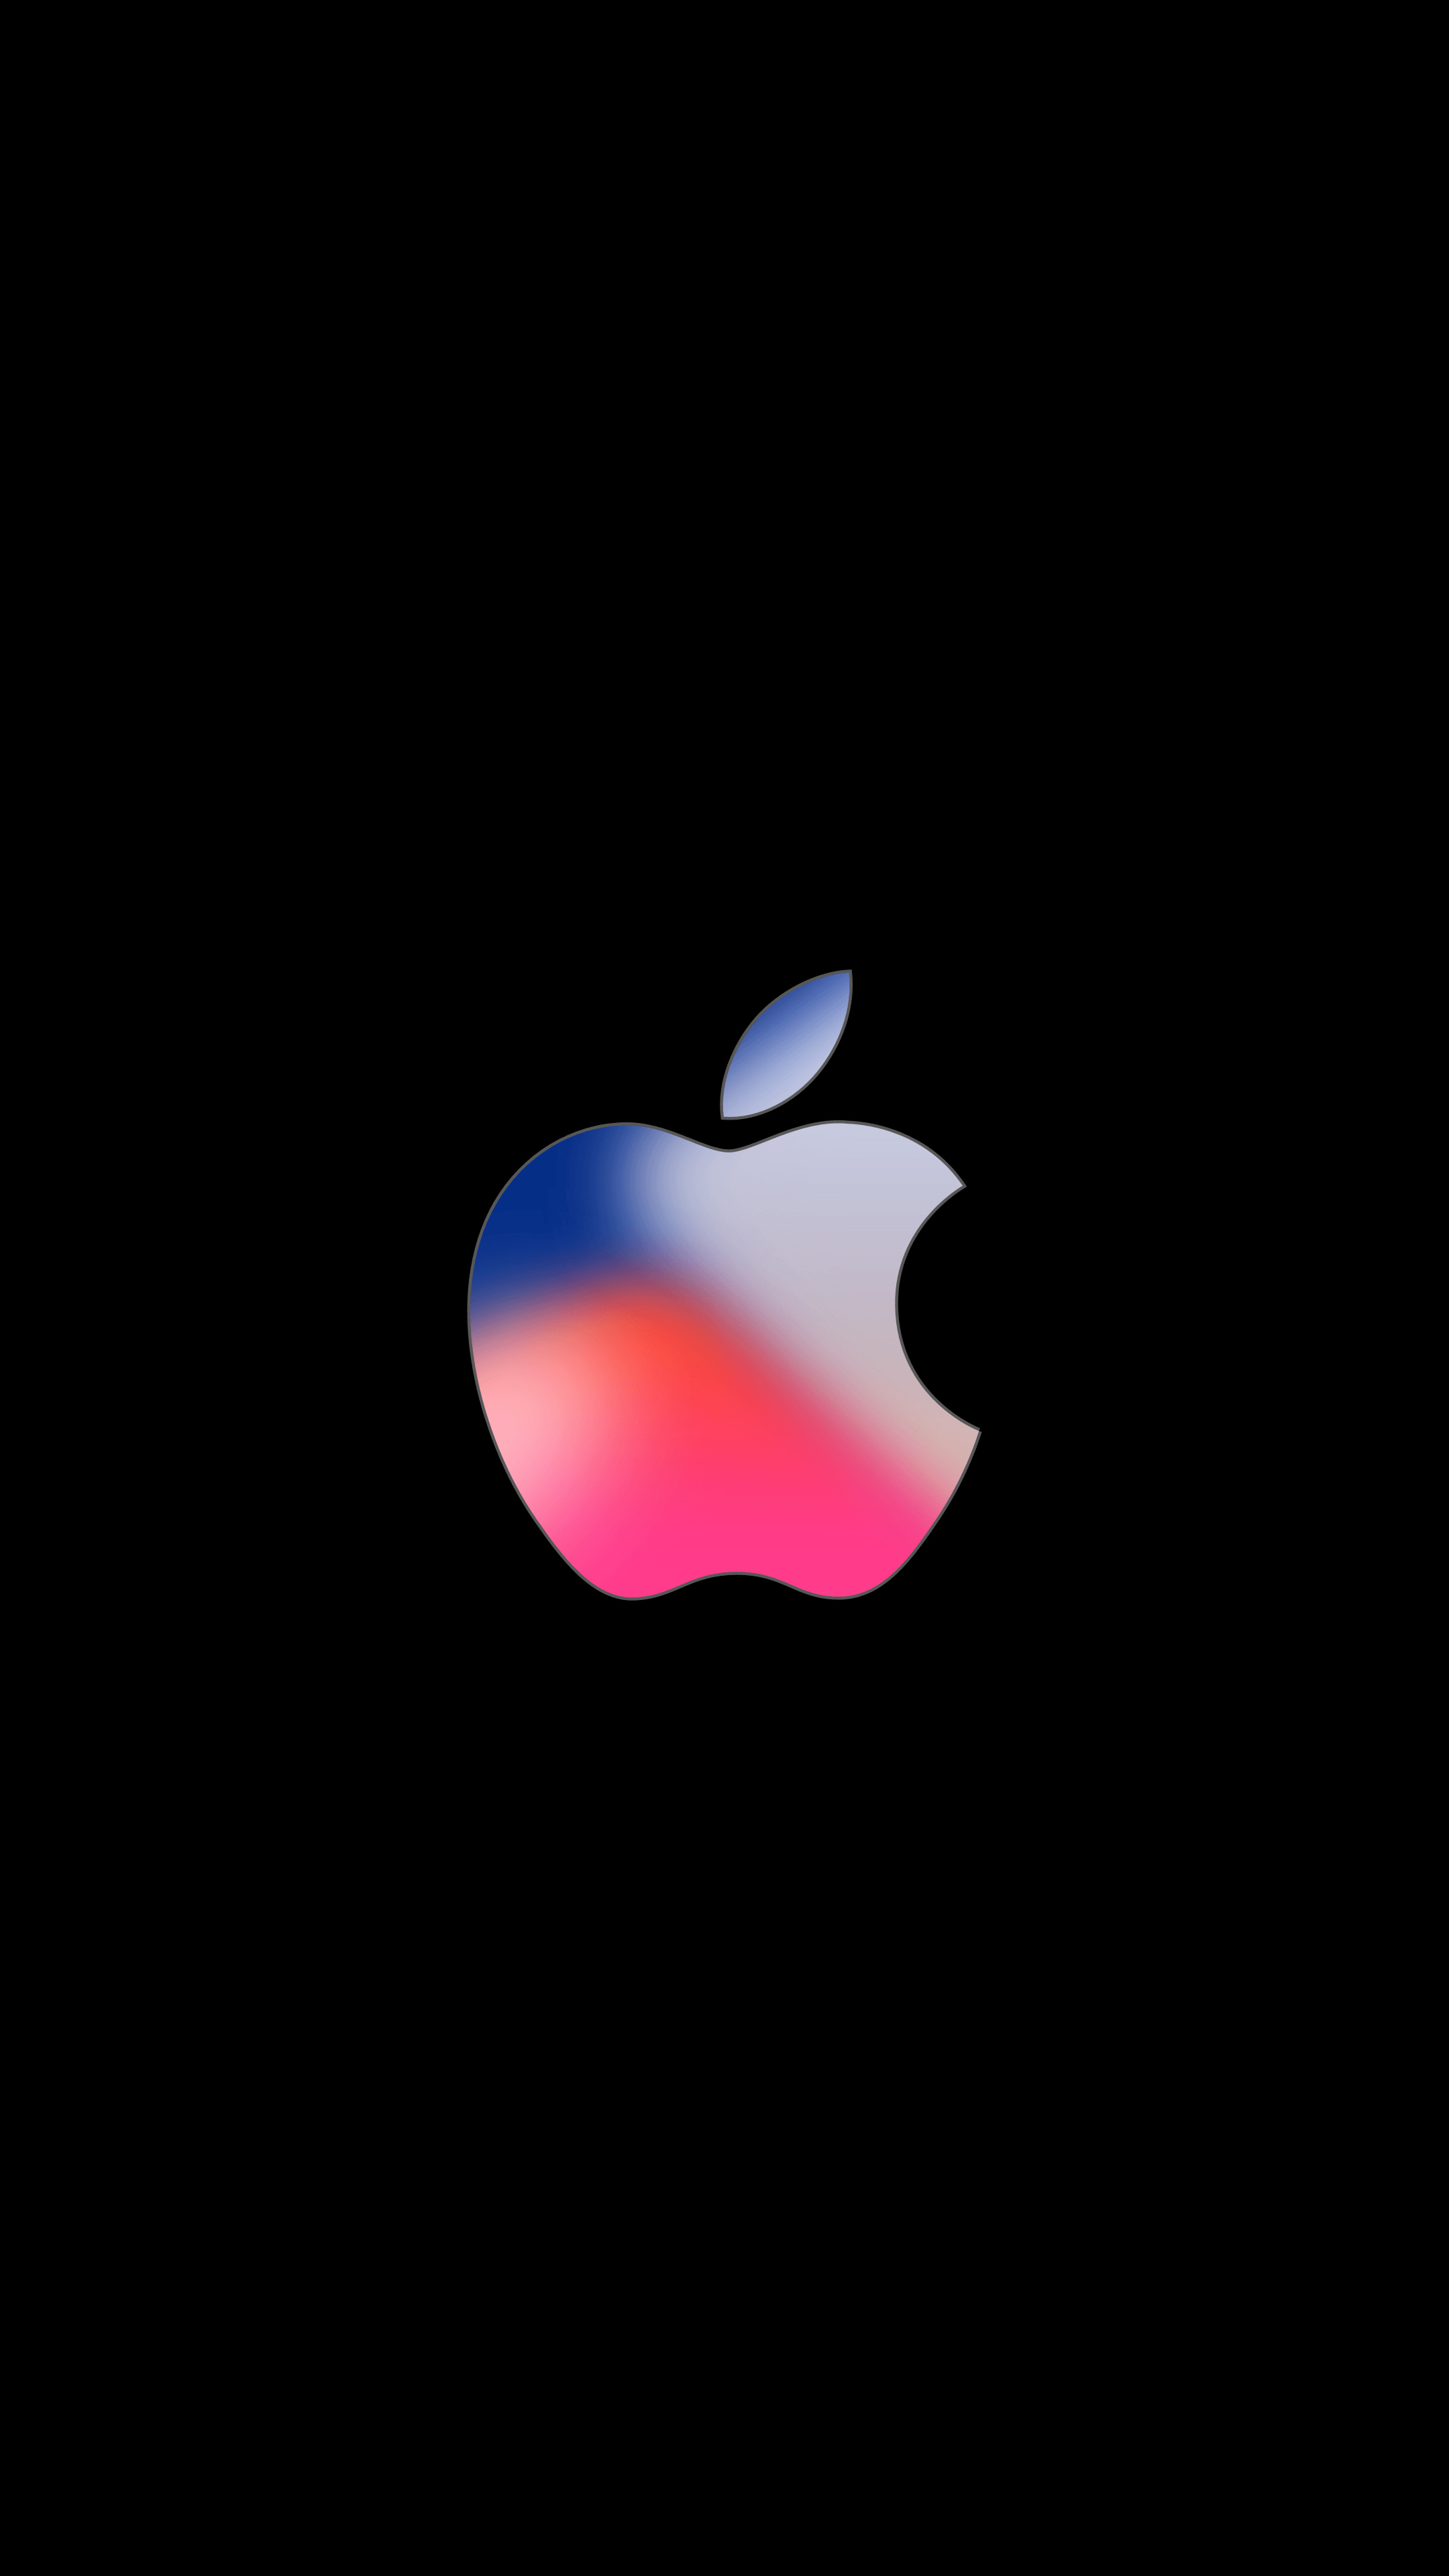 iMac Logo, iPhone brand wallpapers, Sleek and sophisticated, Apple brand loyalty, 2160x3840 4K Phone